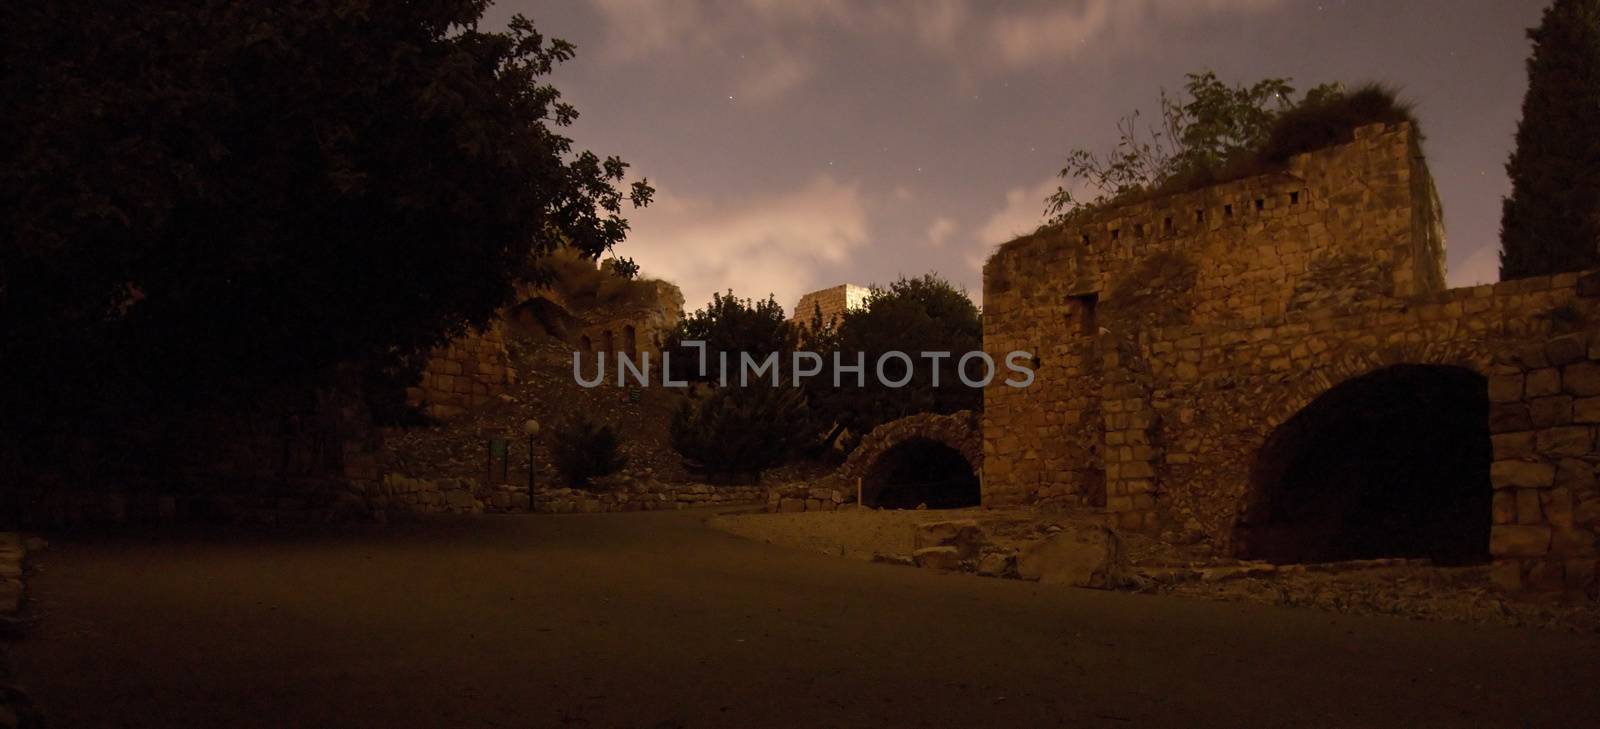 Yekhiam national park Castle in Israel night view